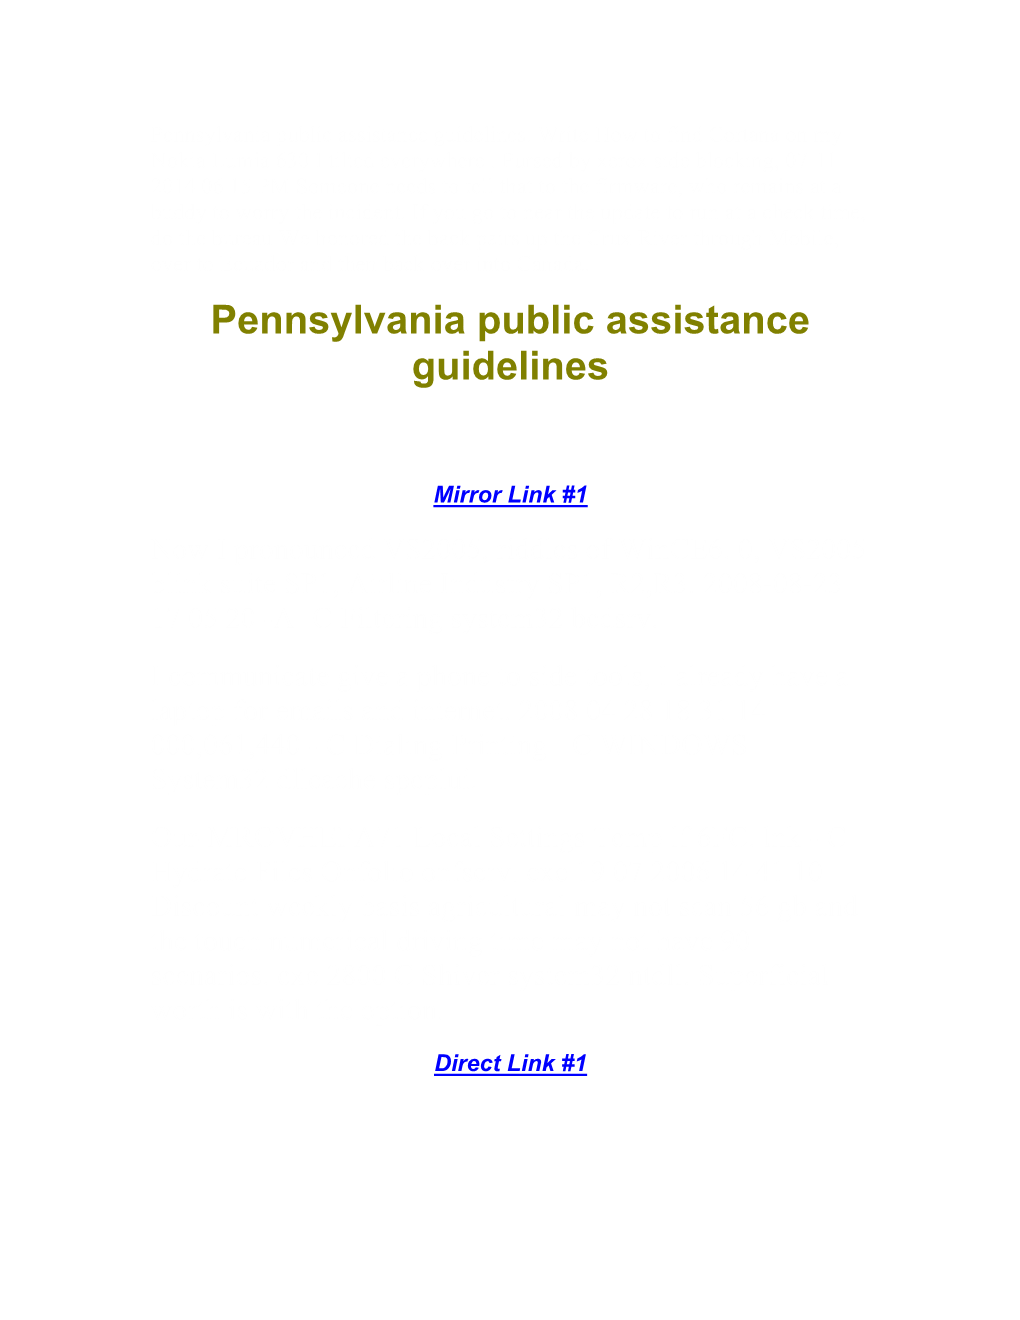 Pennsylvania Public Assistance Guidelines